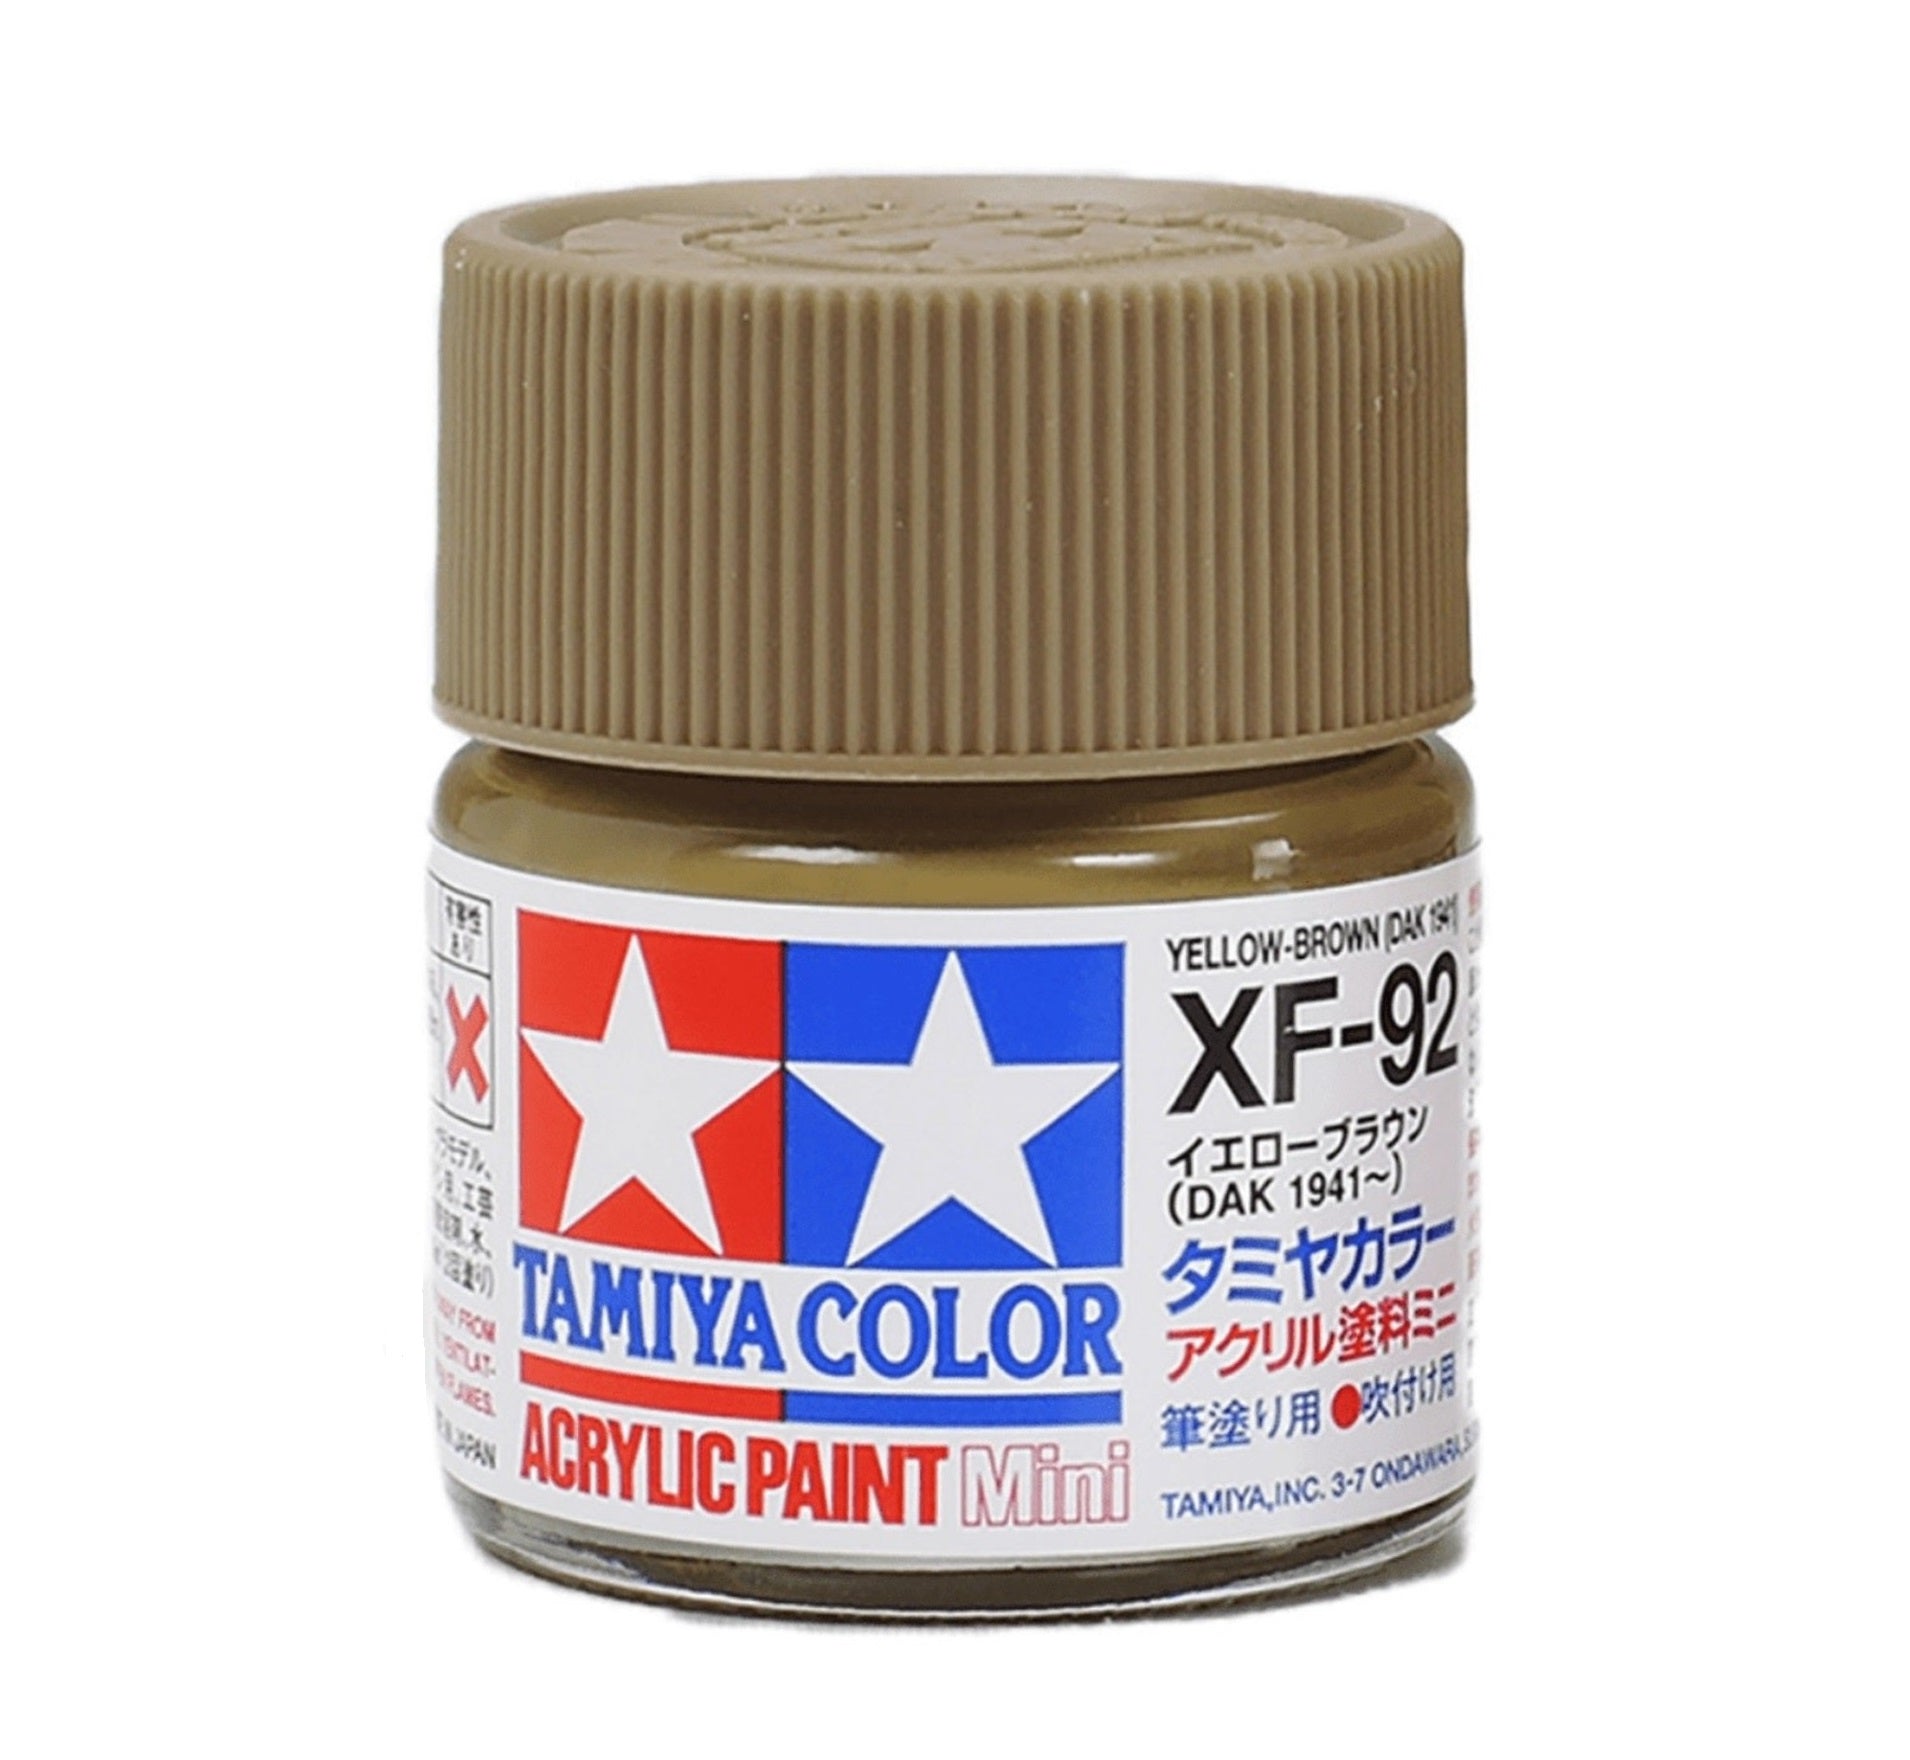 Tamiya Acrylic Paint XF-92 10ml